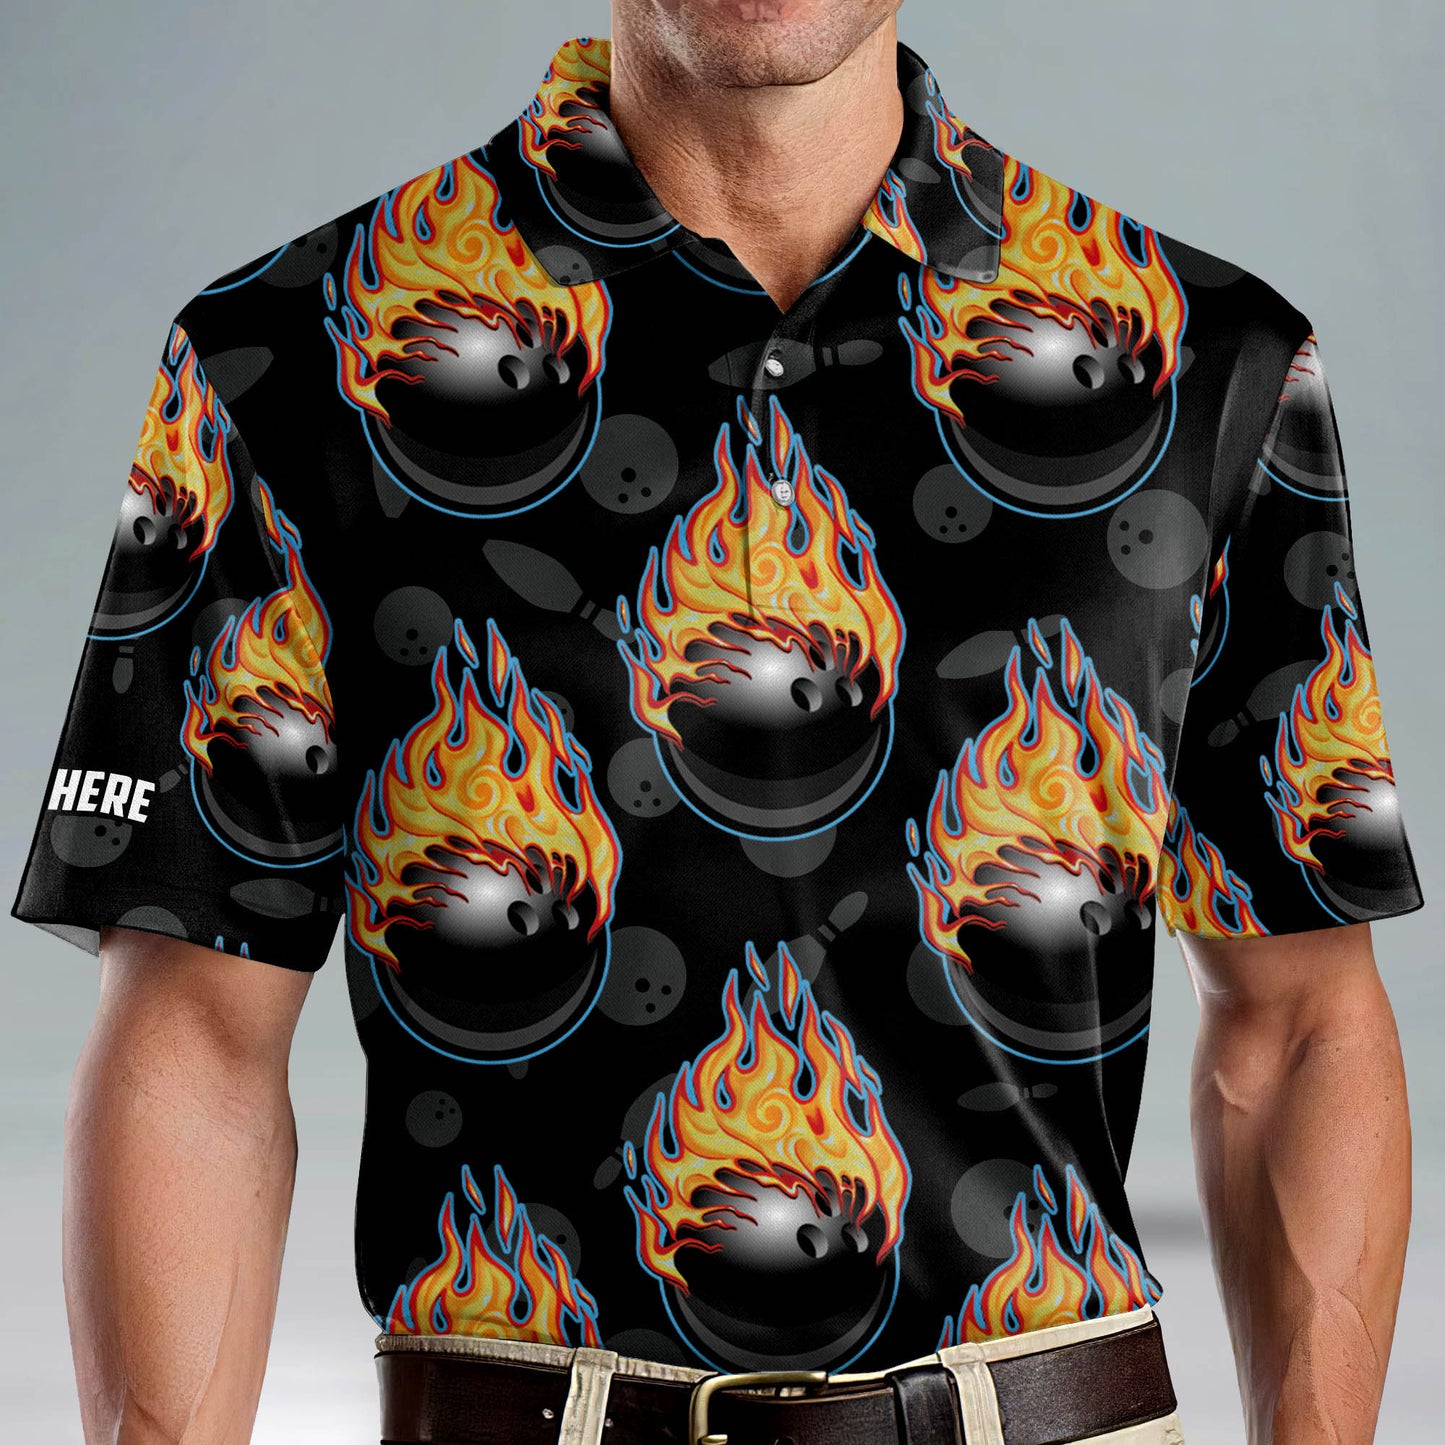 Custom Bowling Shirts For Men - Custom Funny Bowling Shirts Men - Mens Bowling Team Shirts - Flame Ball Short Sleeve Bowling Shirts For Men BM0034